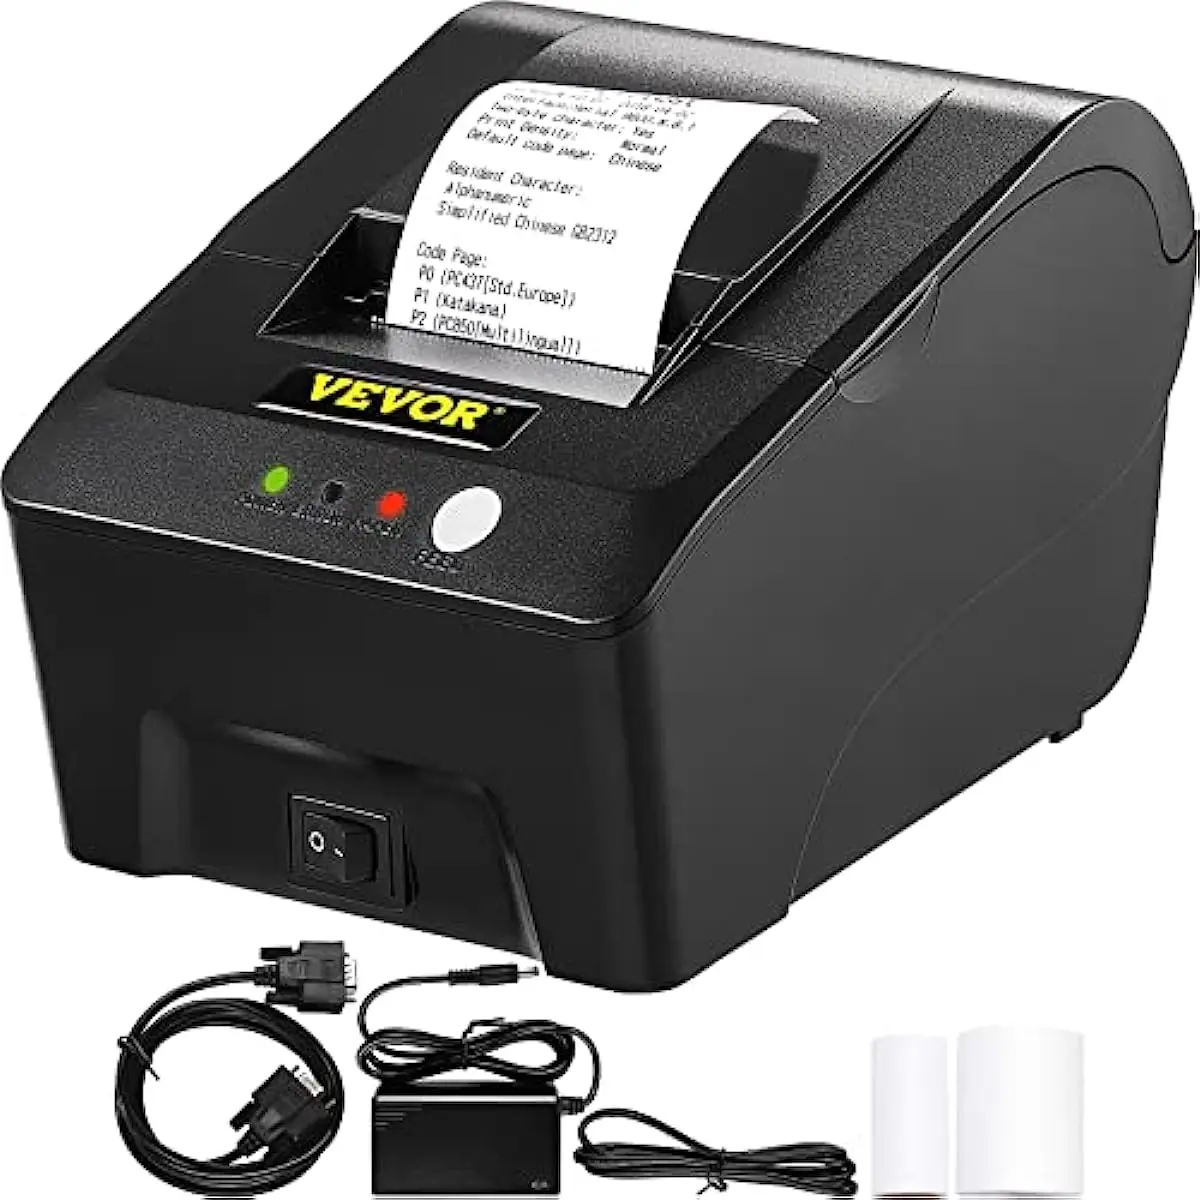 

VEVOR Thermal Receipt Printer 58mm ESC/POS Portable for Bank Supermarket Office Restaurant Support Win 2003/XP/7/8/10